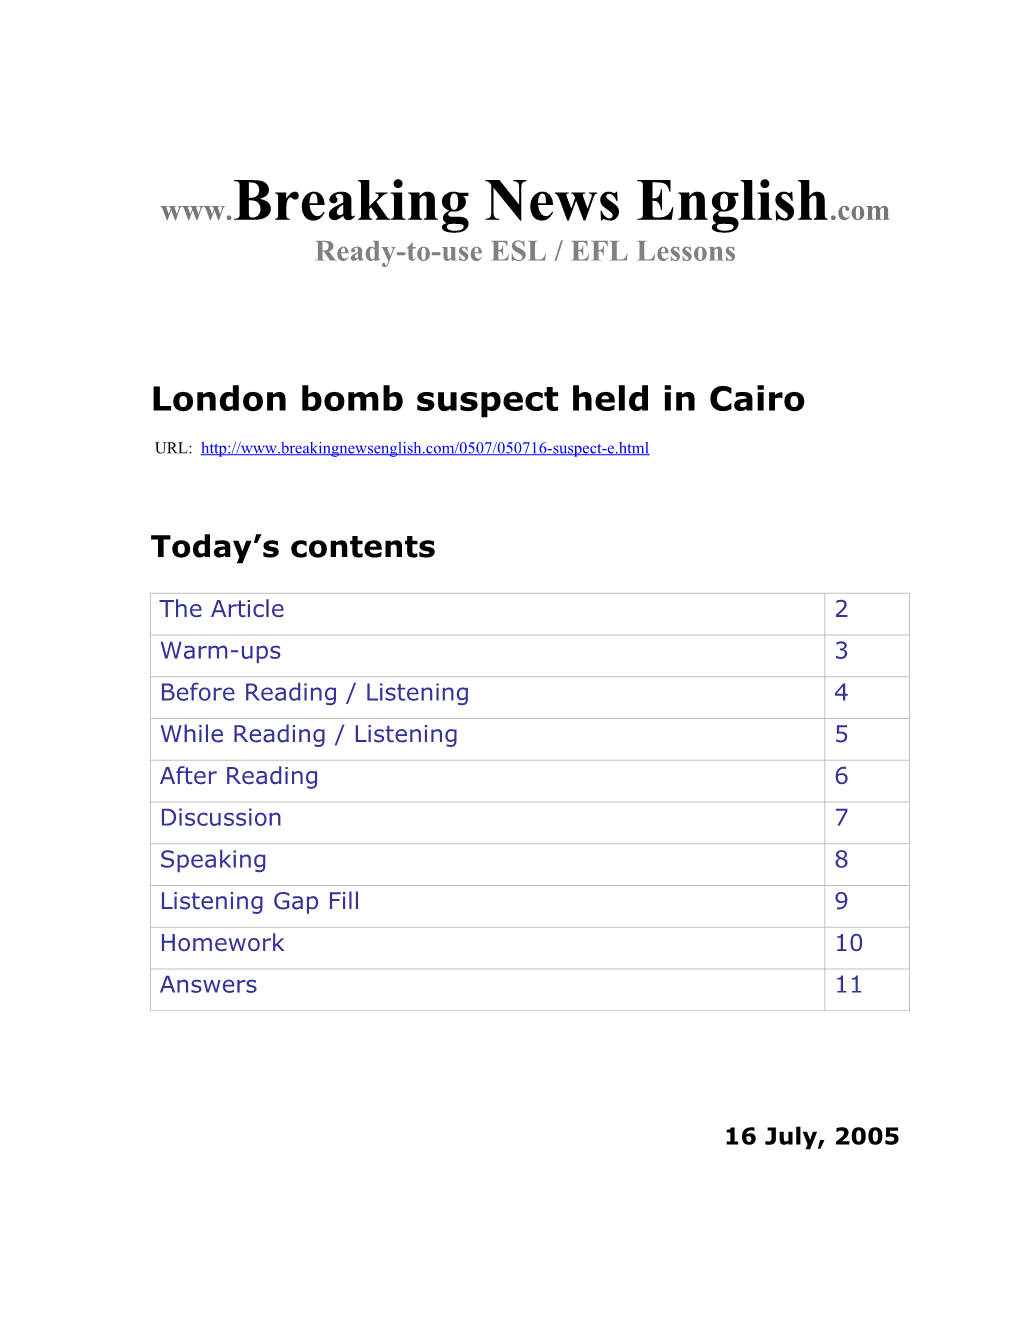 London Bomb Suspect Held in Cairo